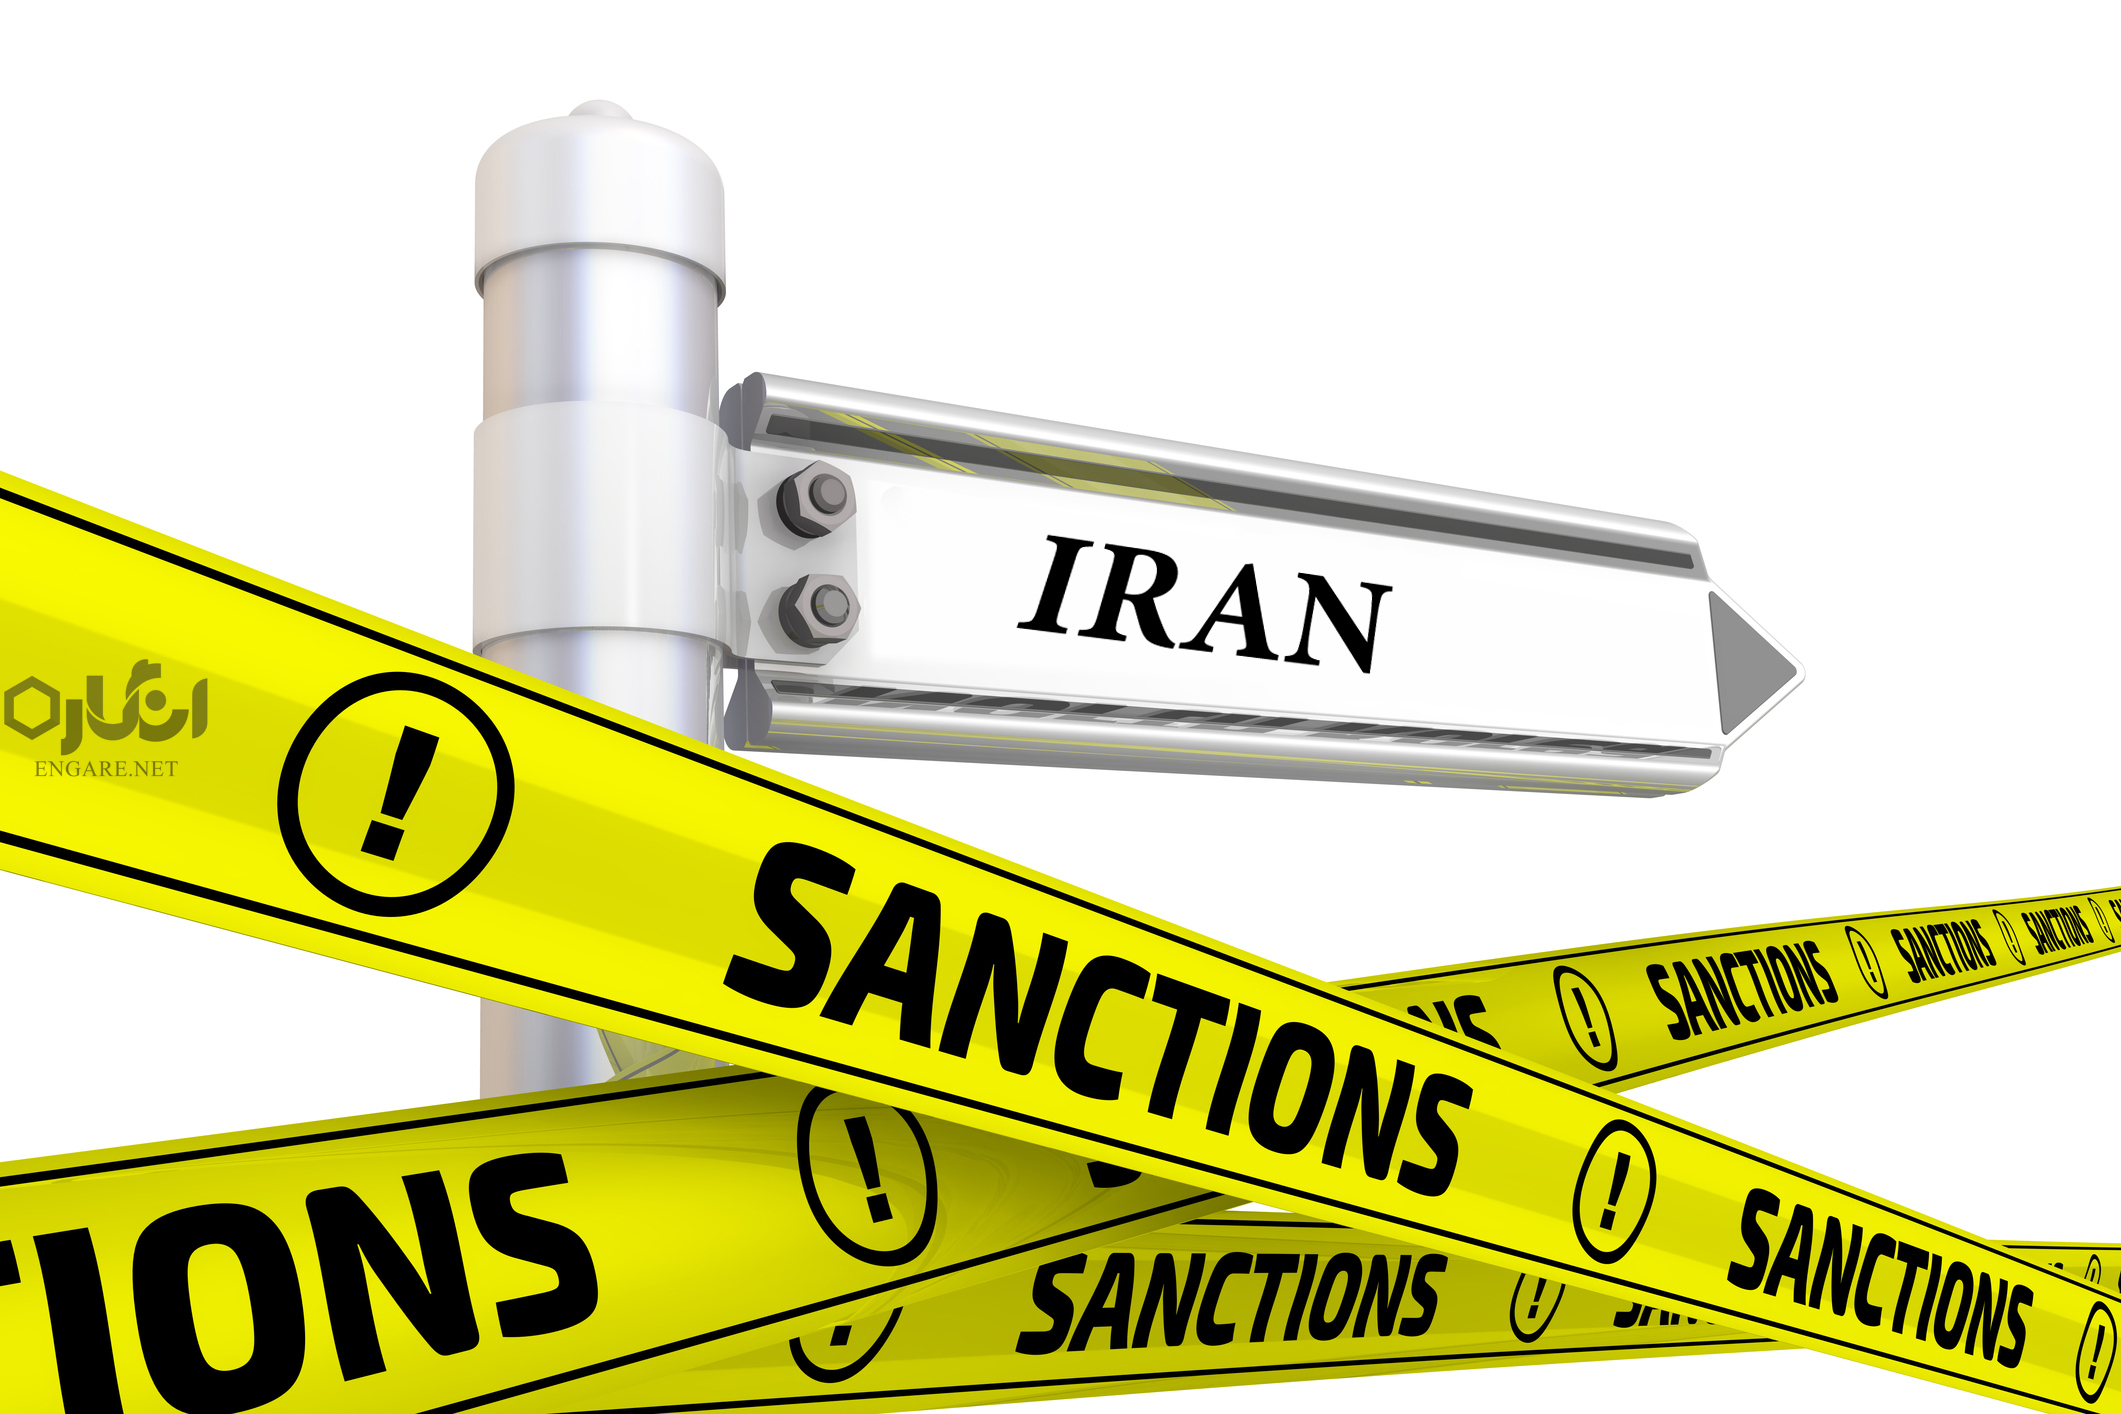 Iran sanctions - ما در مقابل جادوگر «واقعیت» - فشارهای بین‌المللی, فساد ساختاری, فساد, علی نصری, رکود بزرگ, تورم, تحریم‌های اقتصادی, تحریم همه جانبه, تحریم چیست, تحریم ایران, تحریم آمریکا